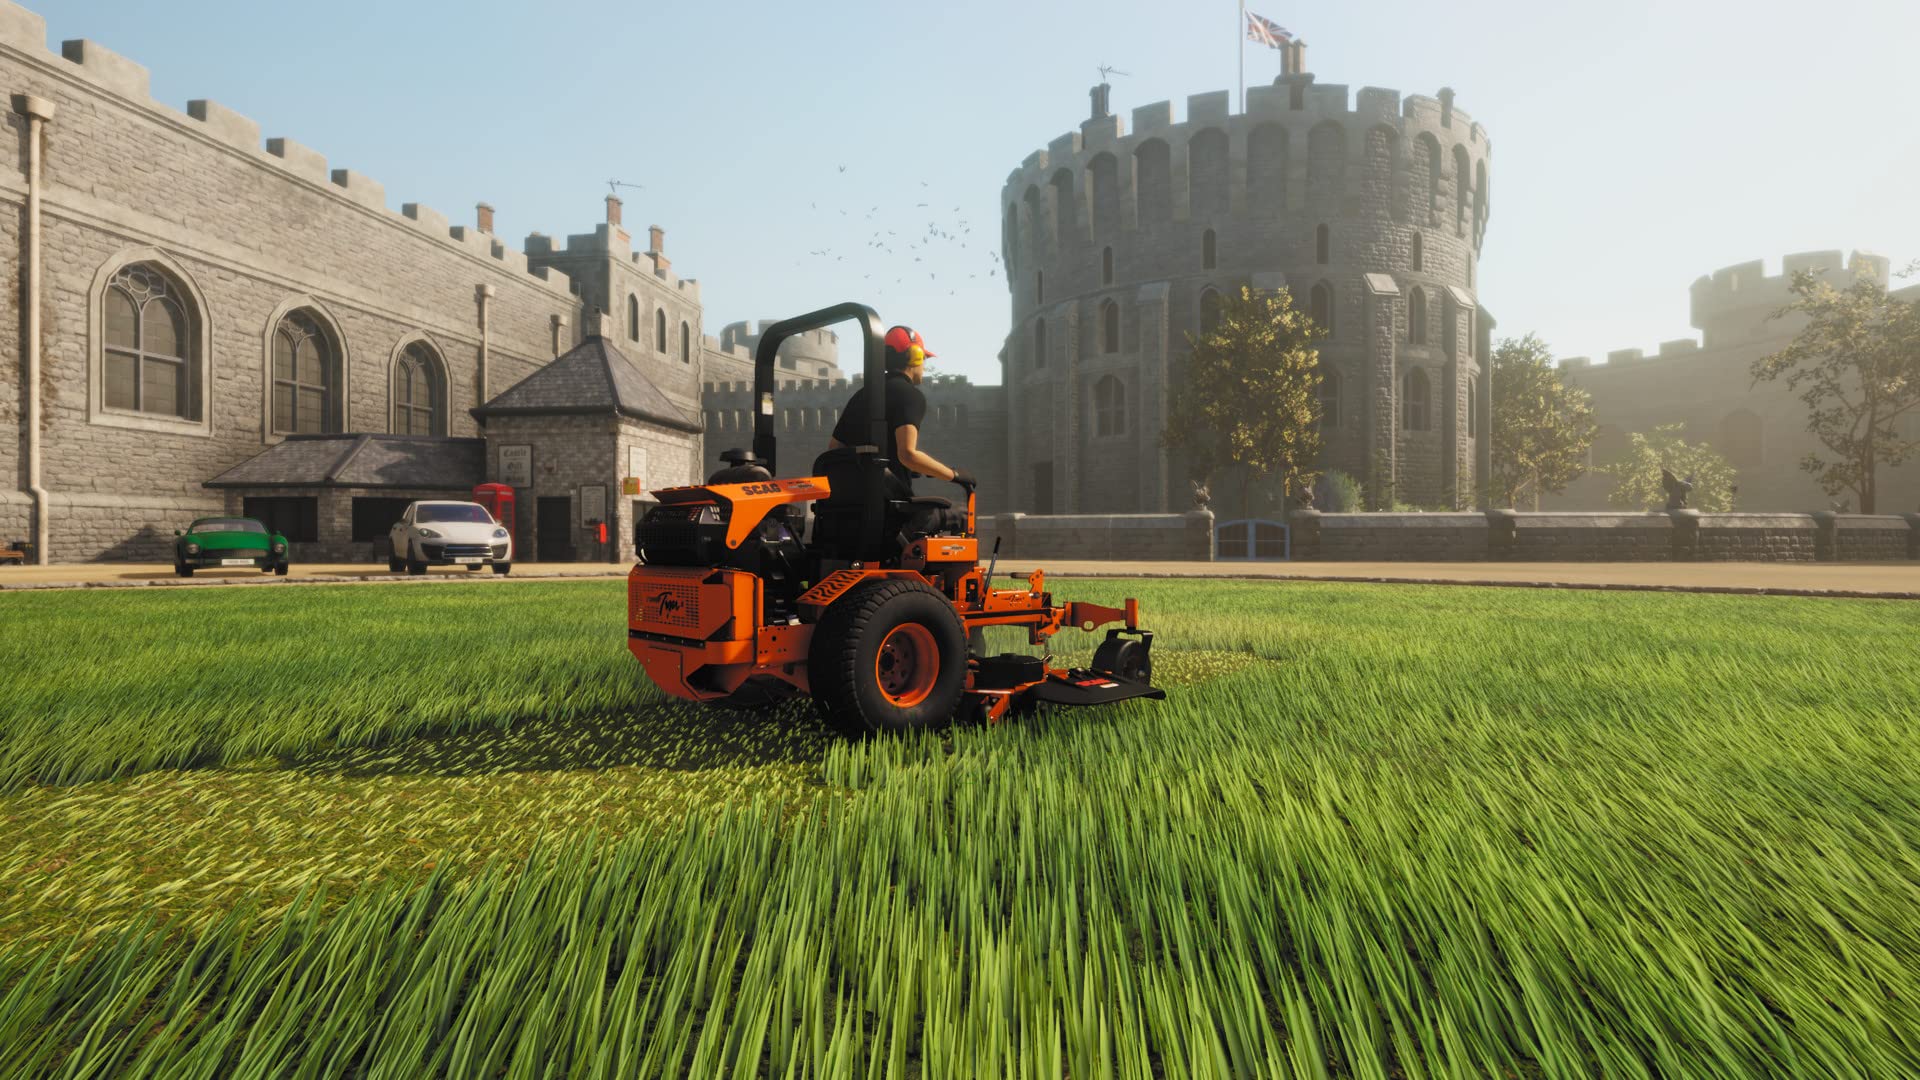 Lawn Mowing Simulator VR 